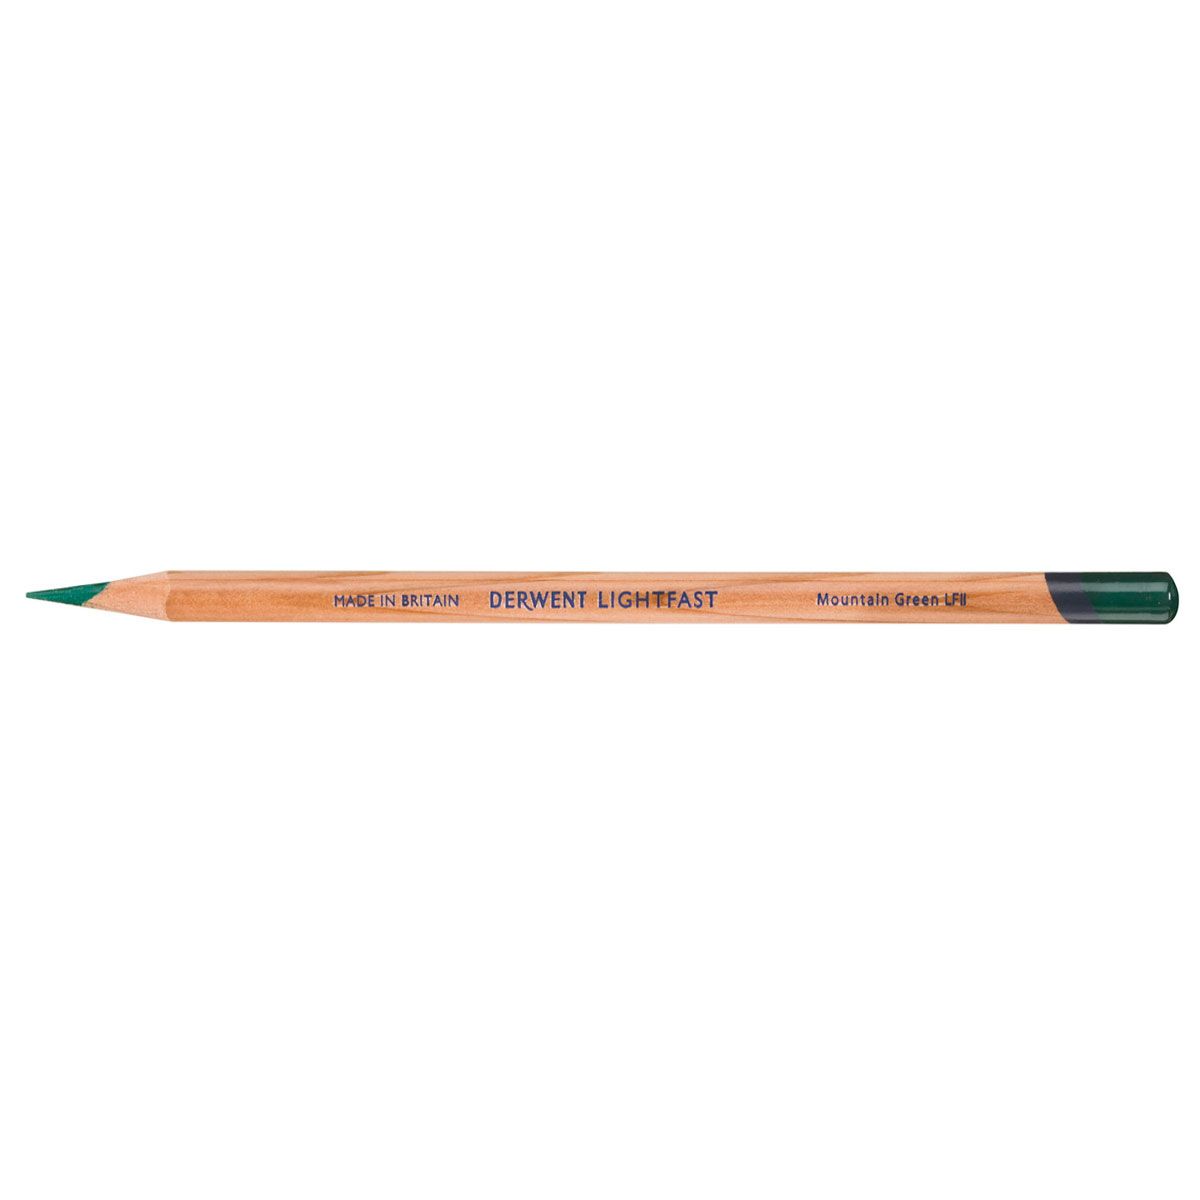 NEW Derwent Lightfast Pencil Colour: Mountain Green